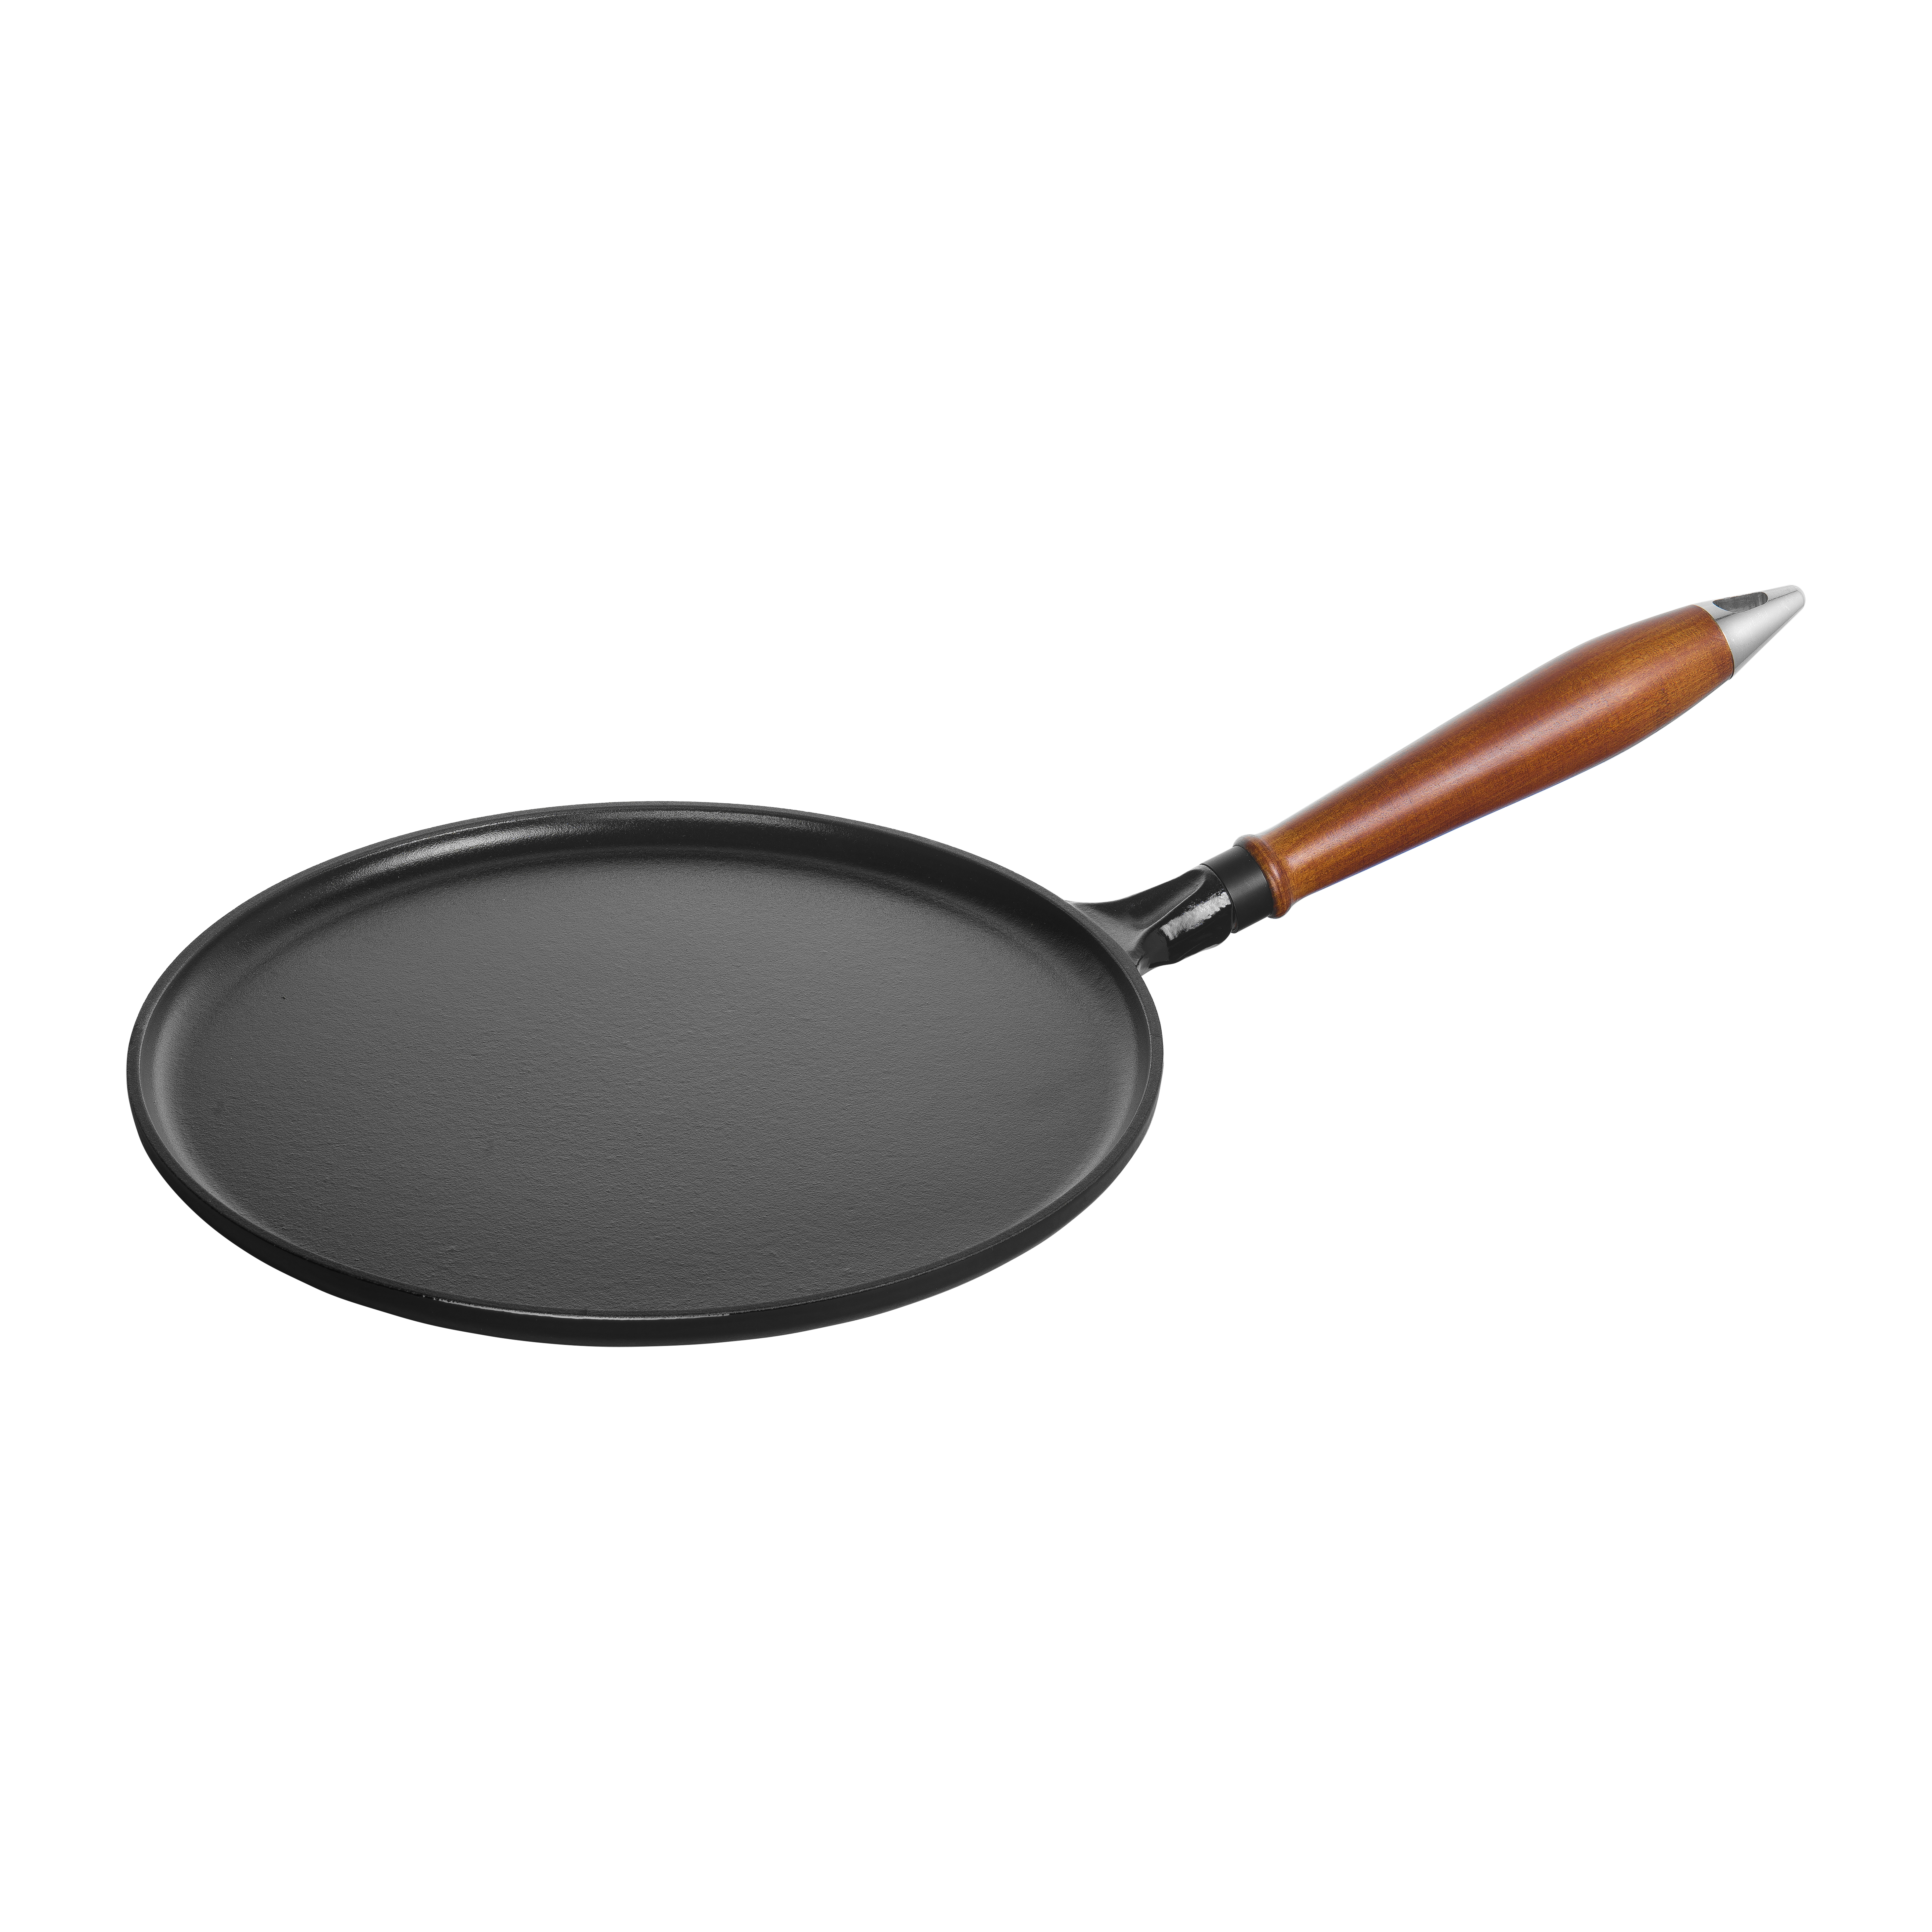 https://www.nordicnest.com/assets/blobs/staub-vintage-pancake-pan-with-wooden-handle-28-cm-black/502857-01_1_ProductImageMain-b0dde74894.jpg